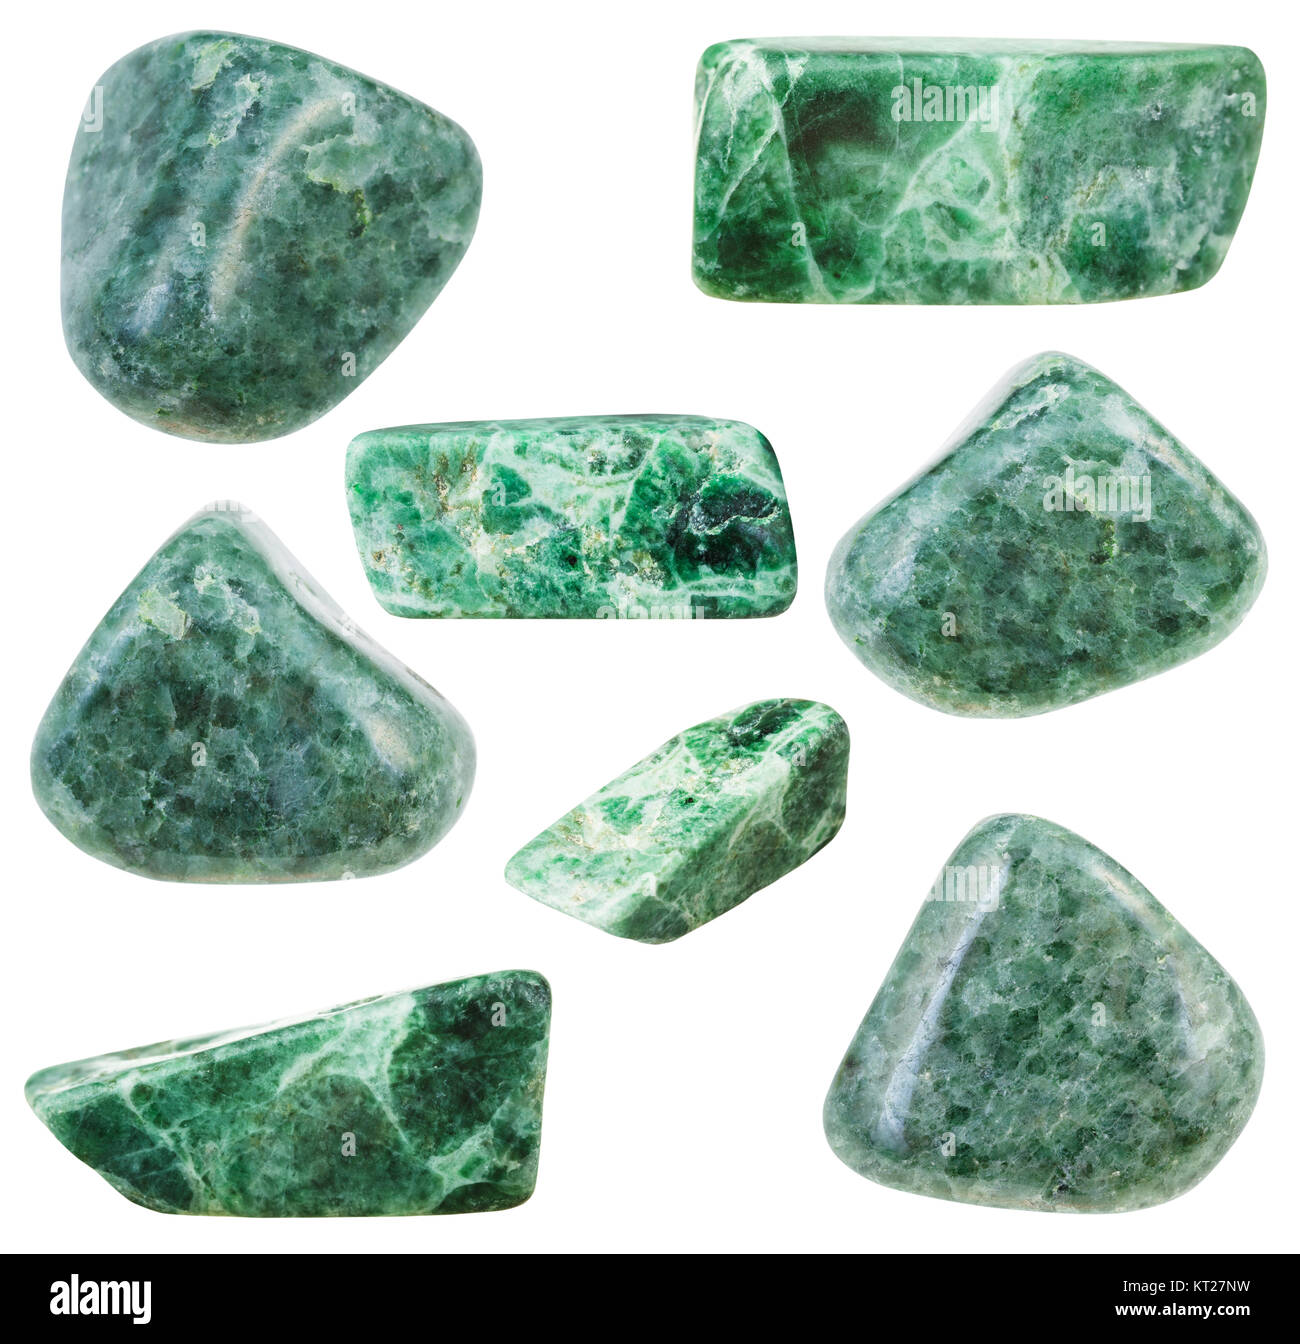 collection of various tumbled green jadeite stones Stock Photo - Alamy